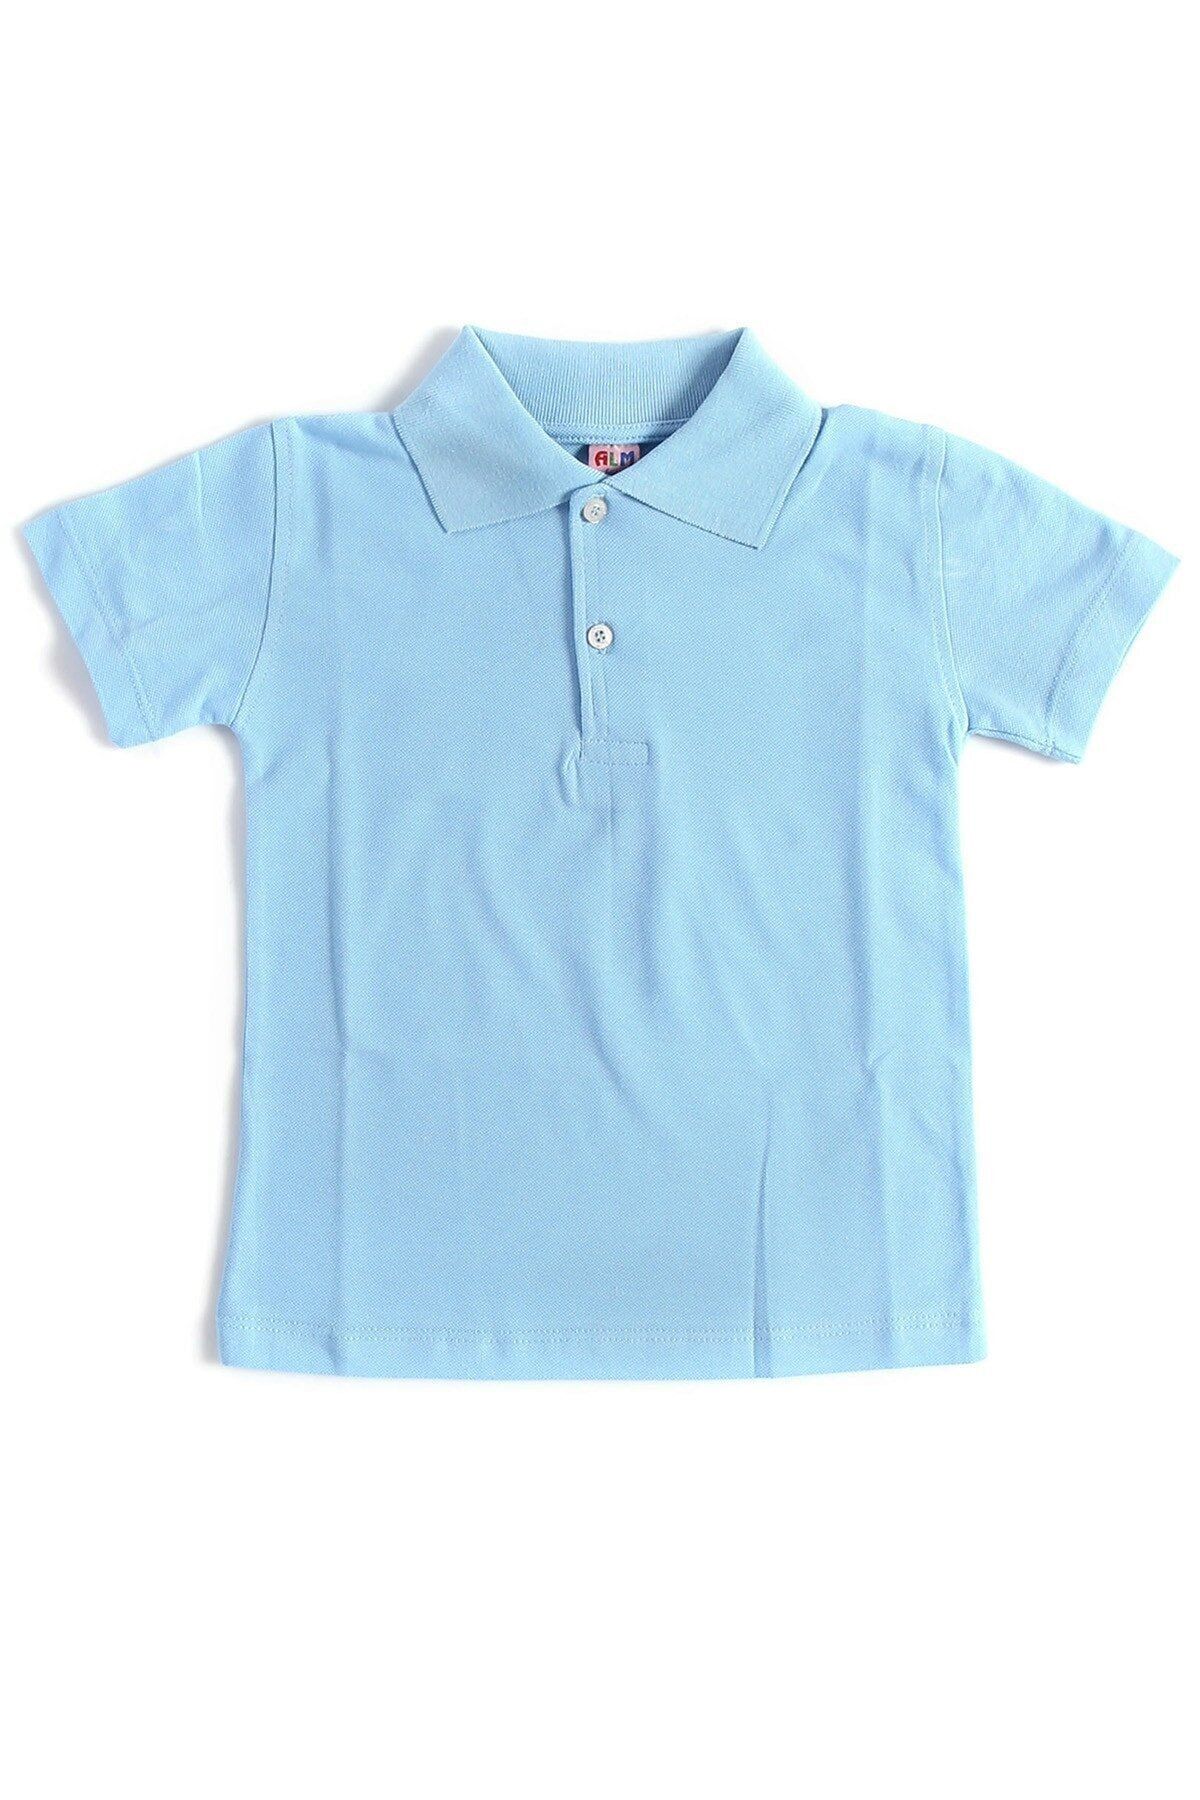 NACAR STORE Unisex Çocuk Polo Yaka Kısa Kol Okul T-shirt